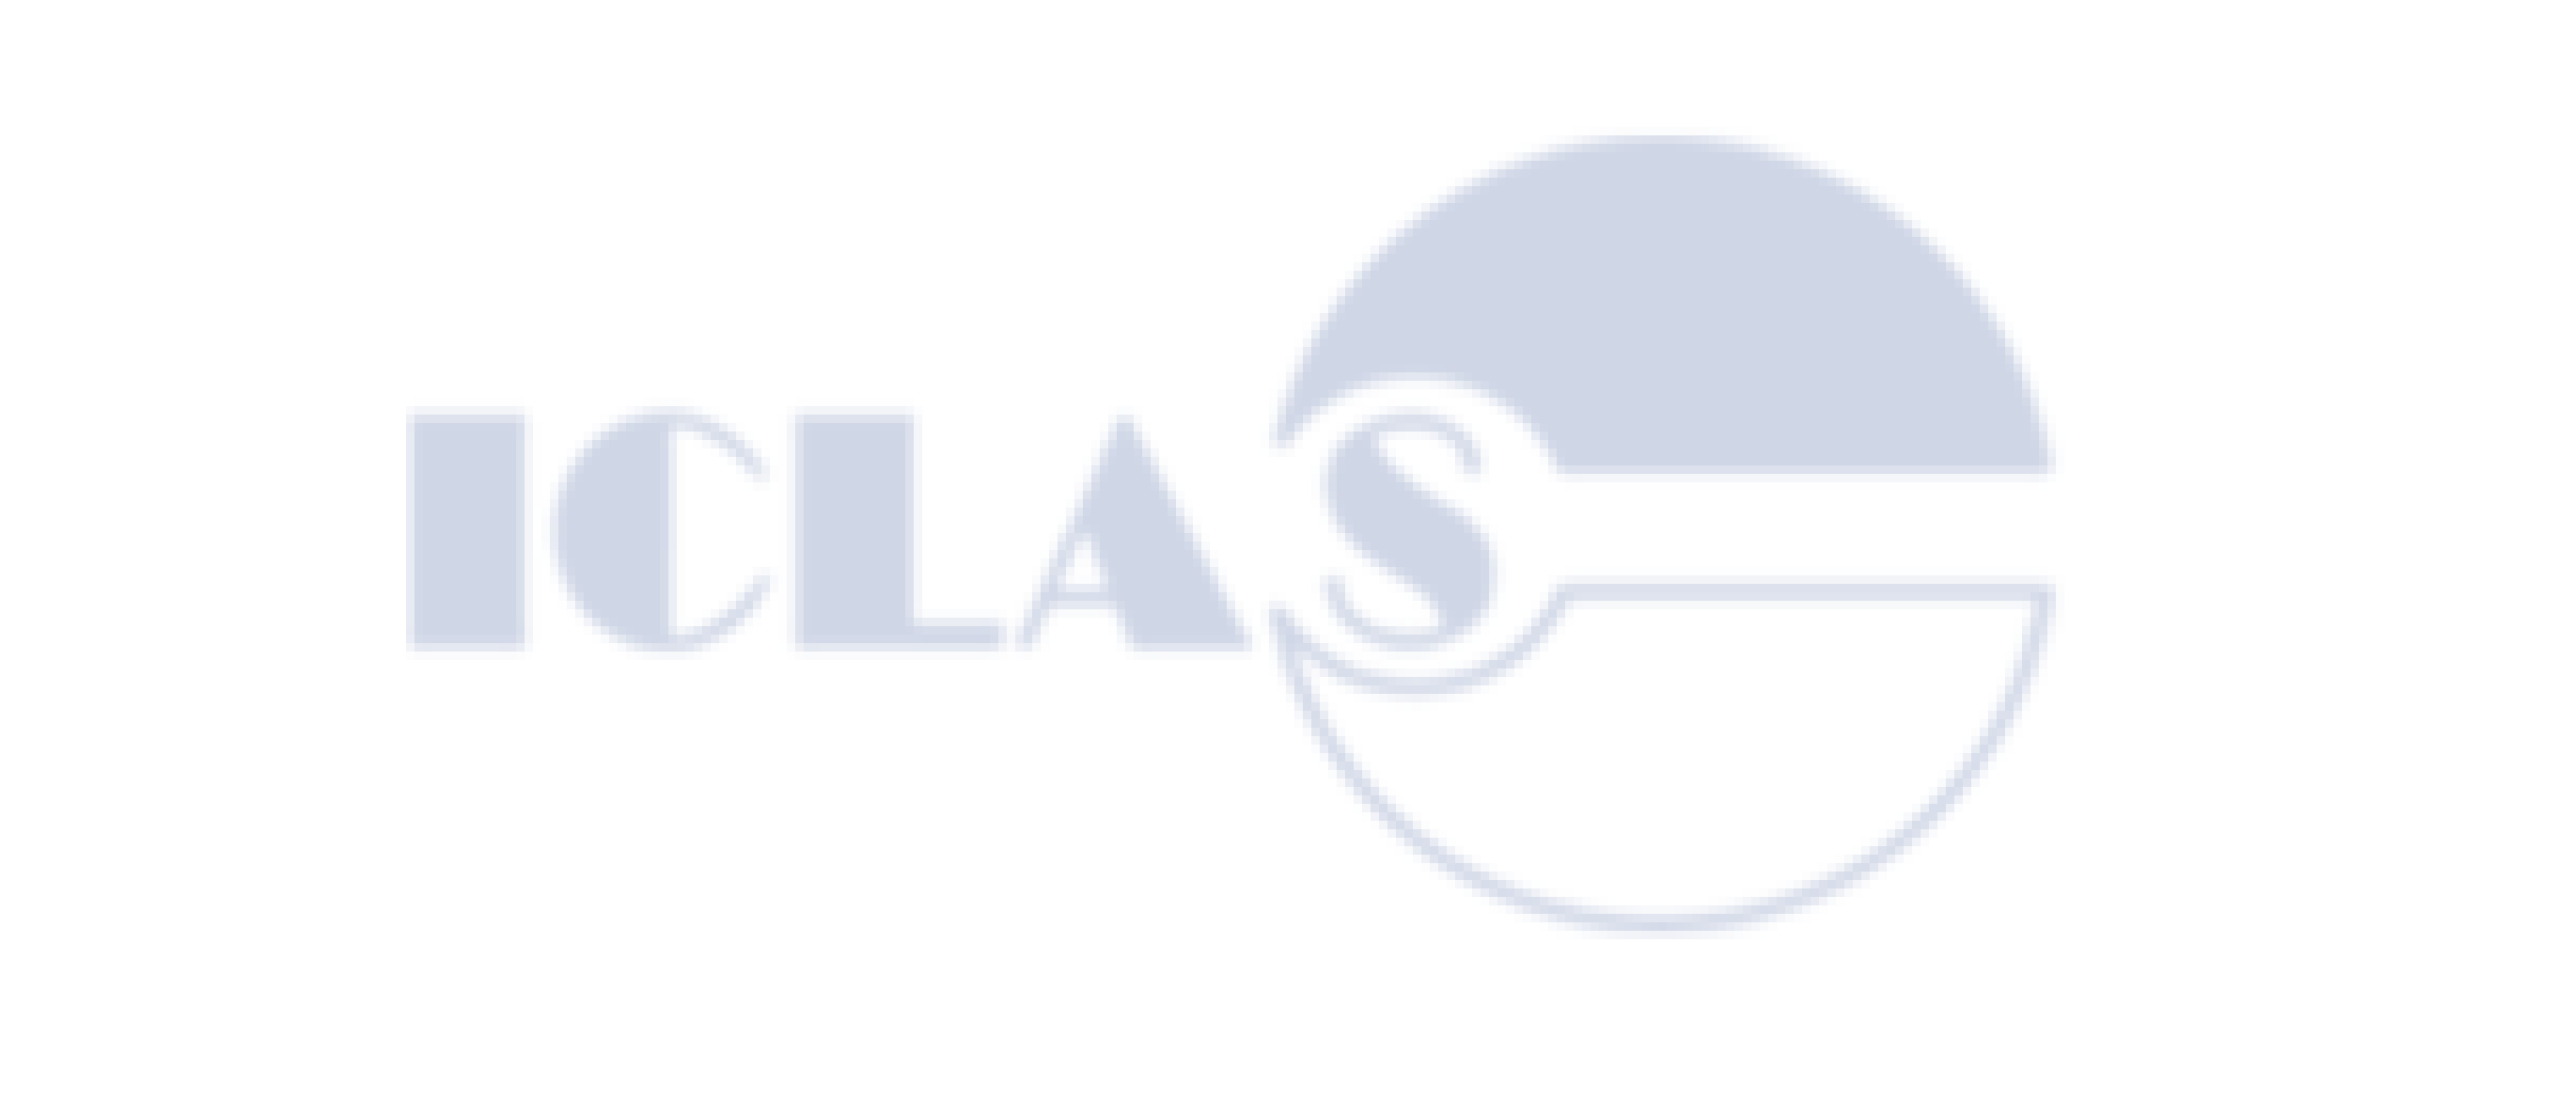 Open Call for Grants to attend FELASA Congress